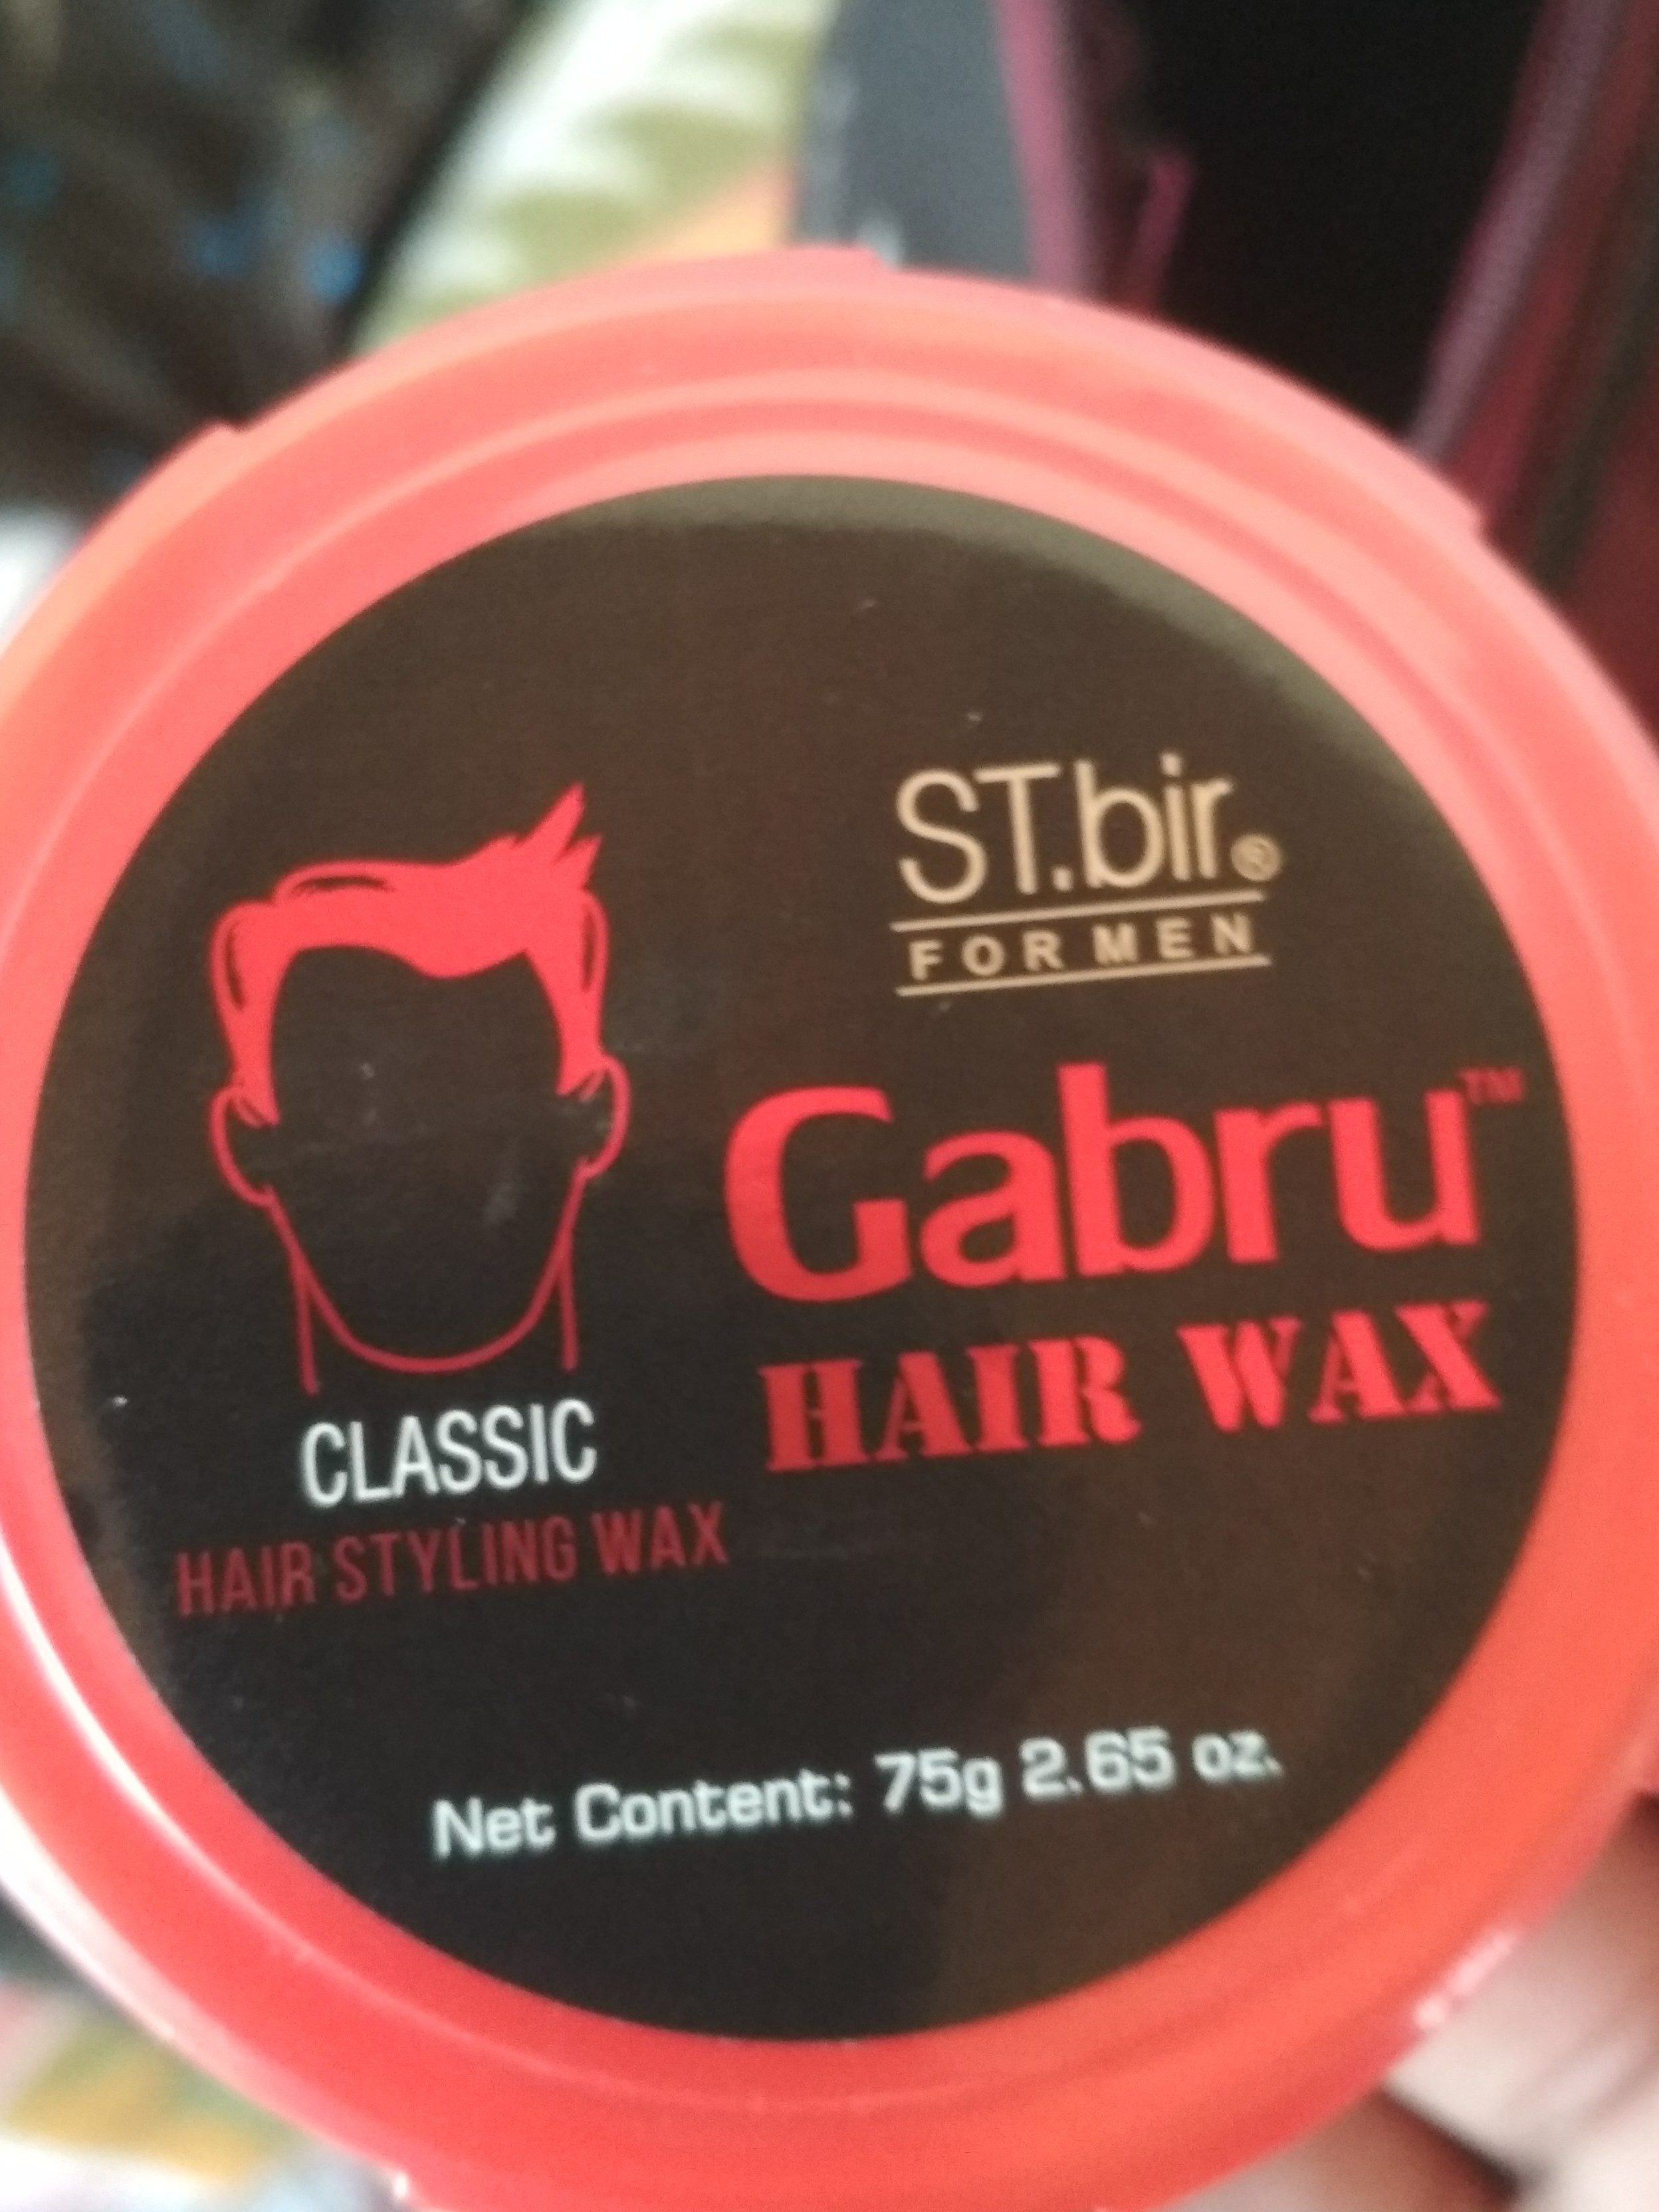 Gabru hair wax - Produit - en